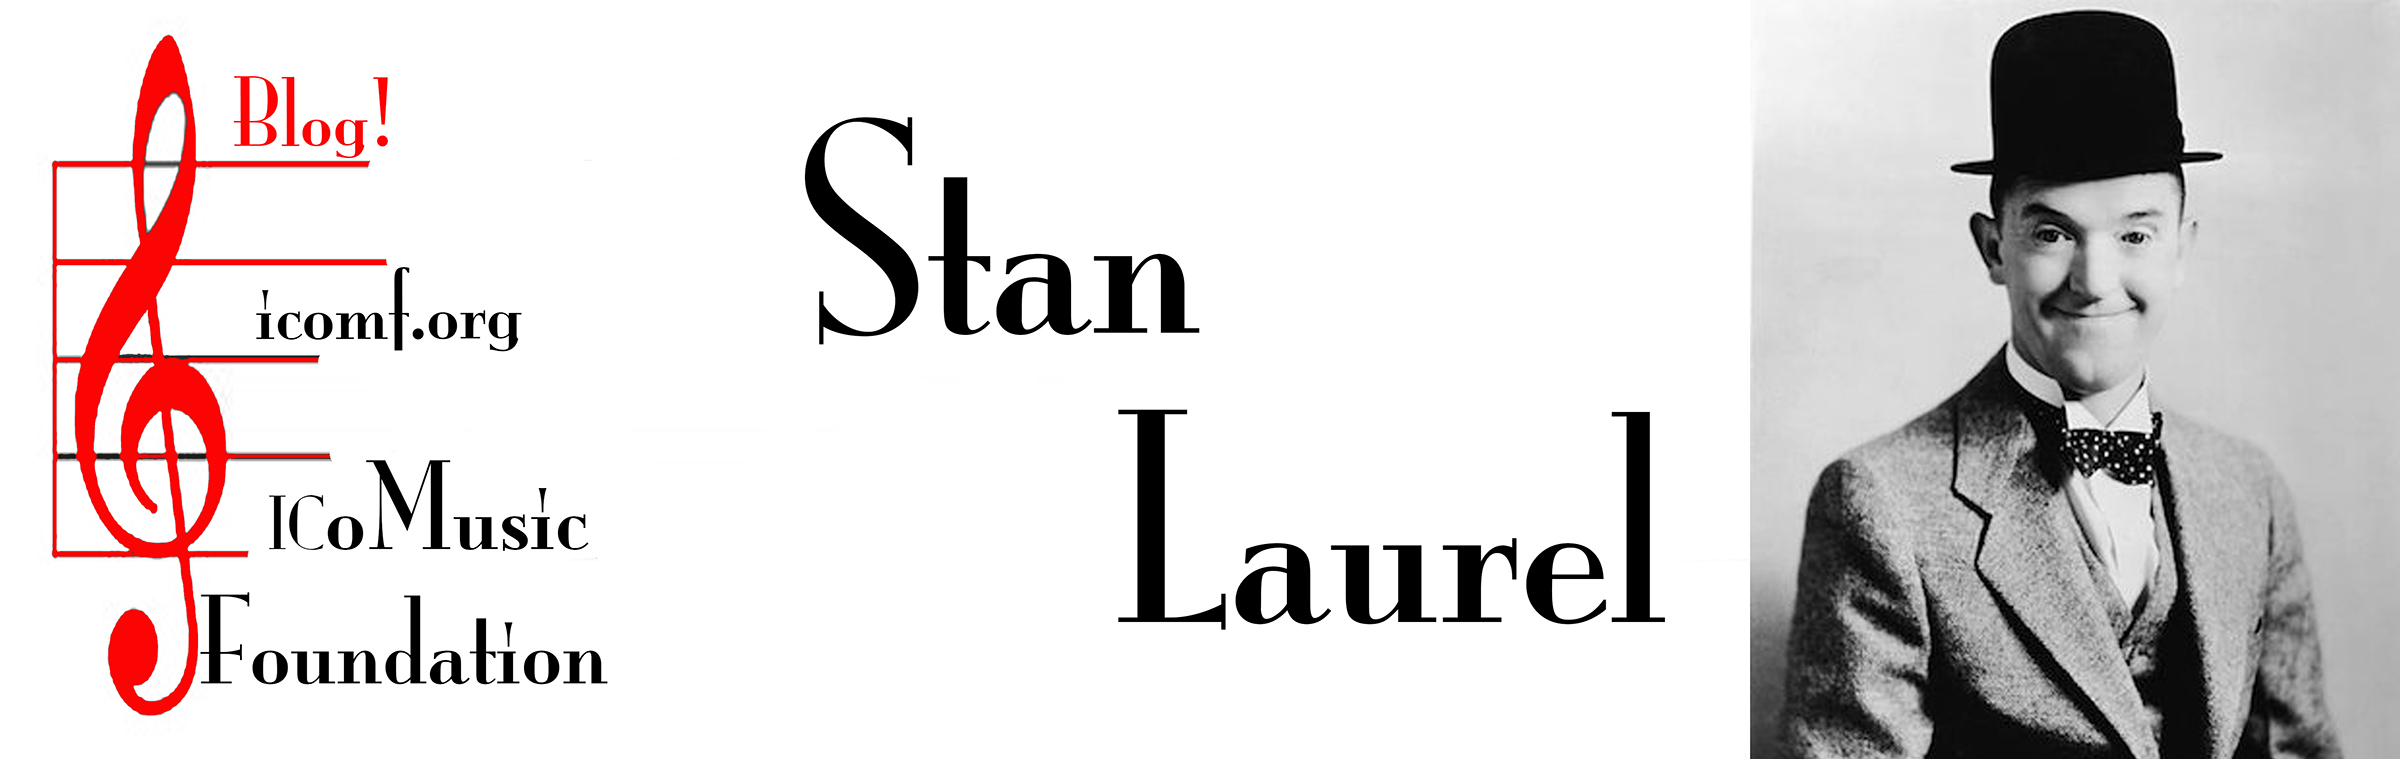 Stan Laurel Blog Banner